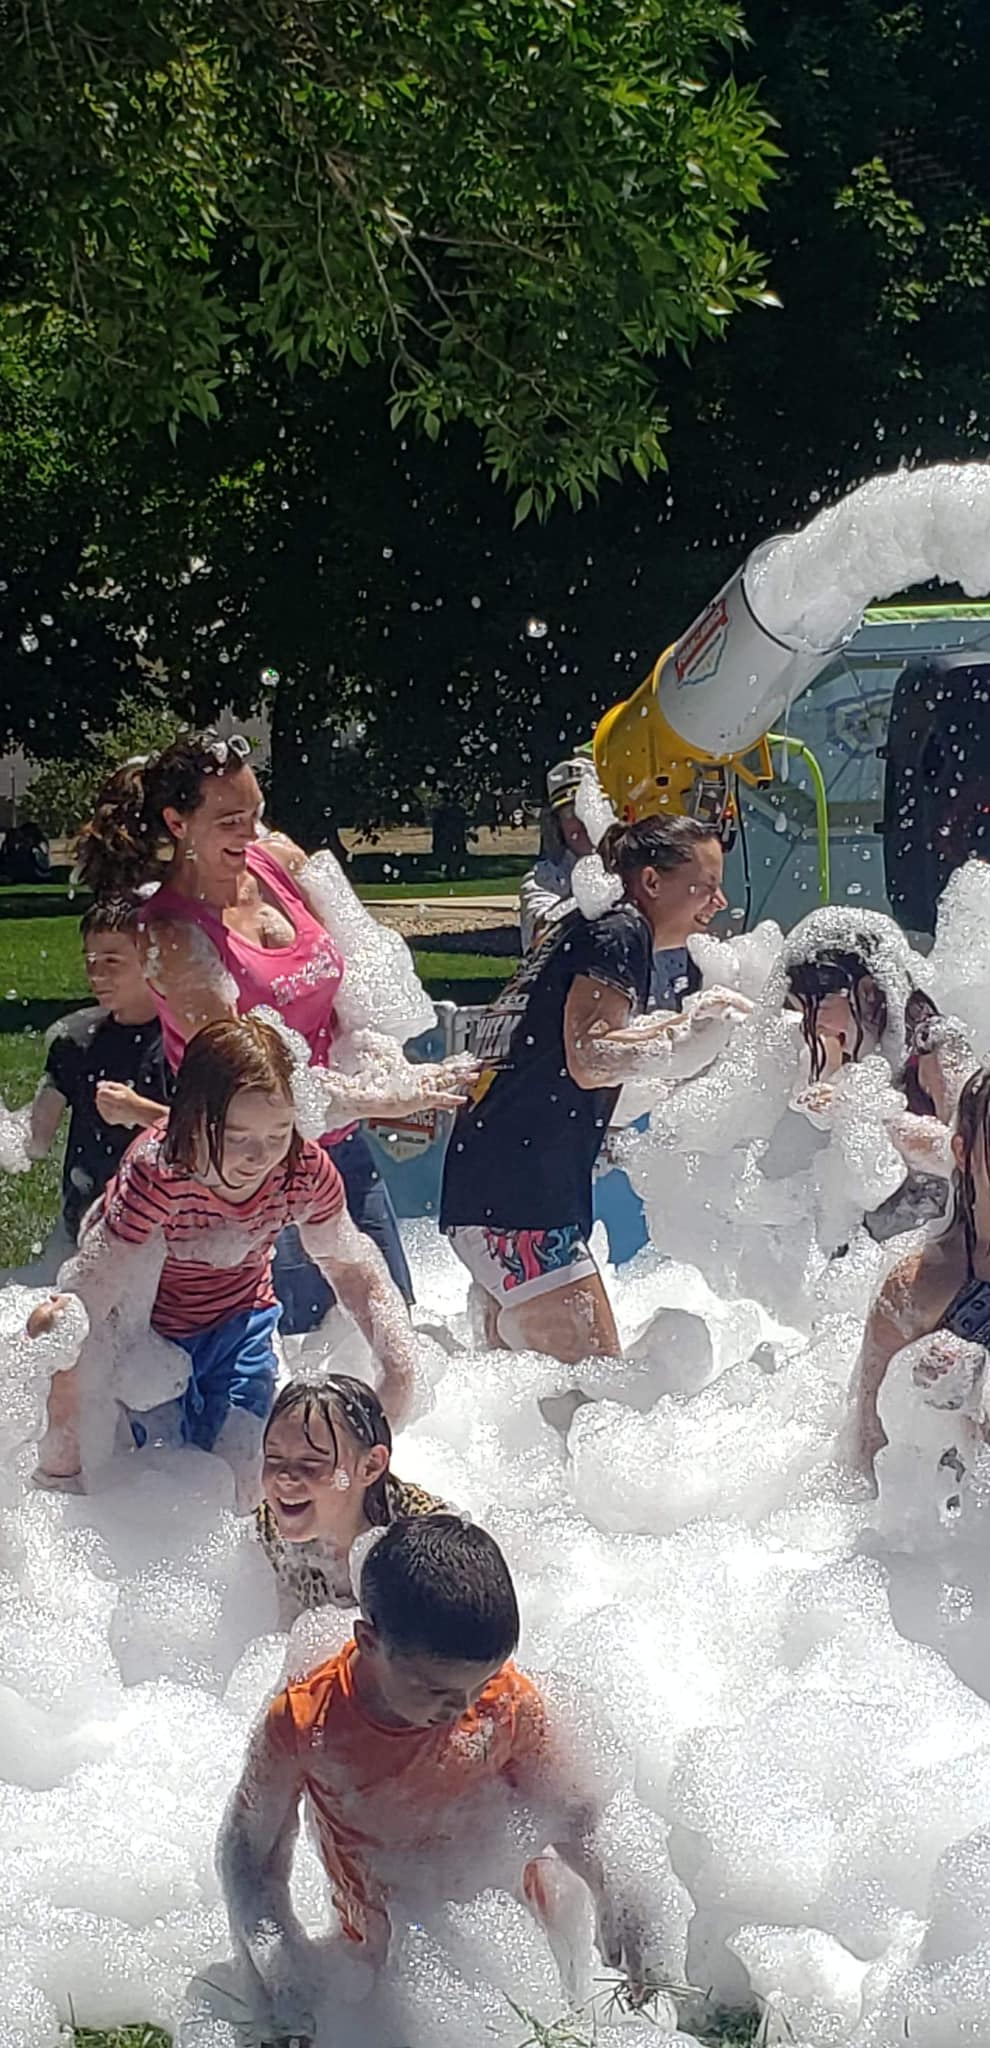 Families playing in foam bubbles